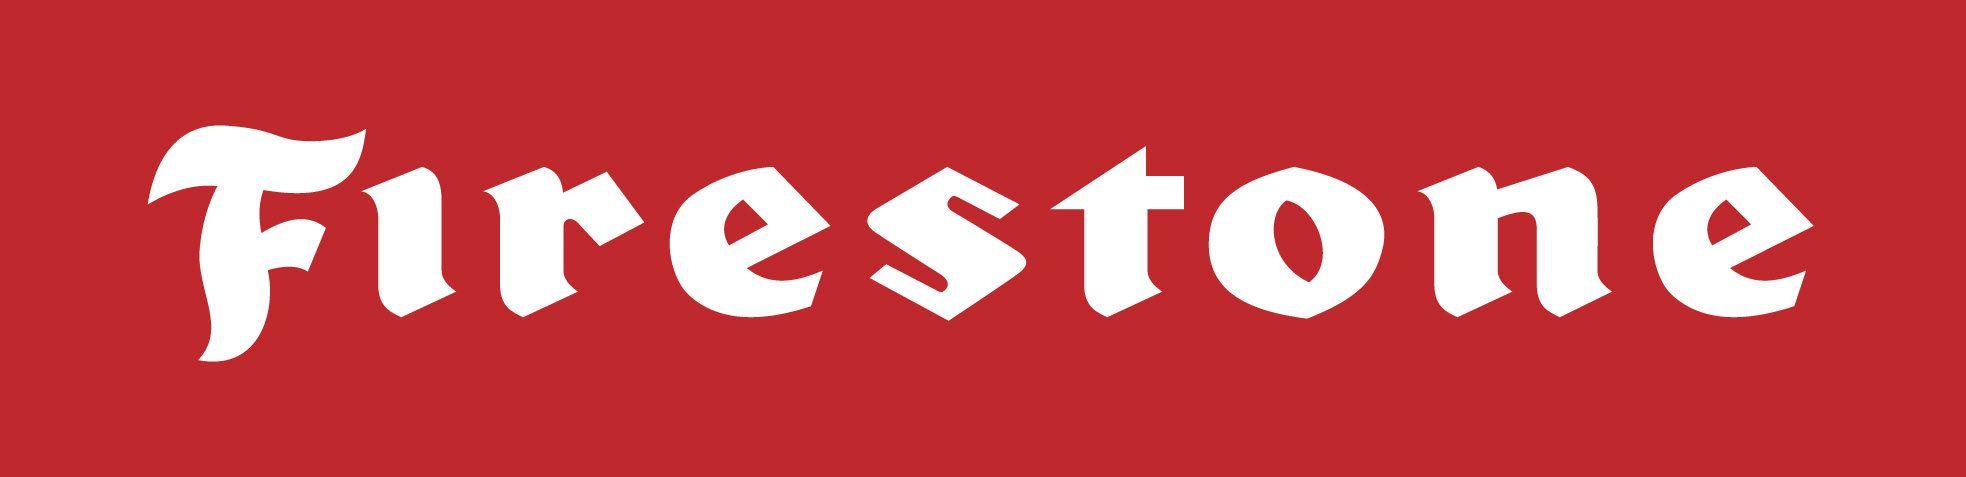 Firestone F Shield Logo - Firestone logo